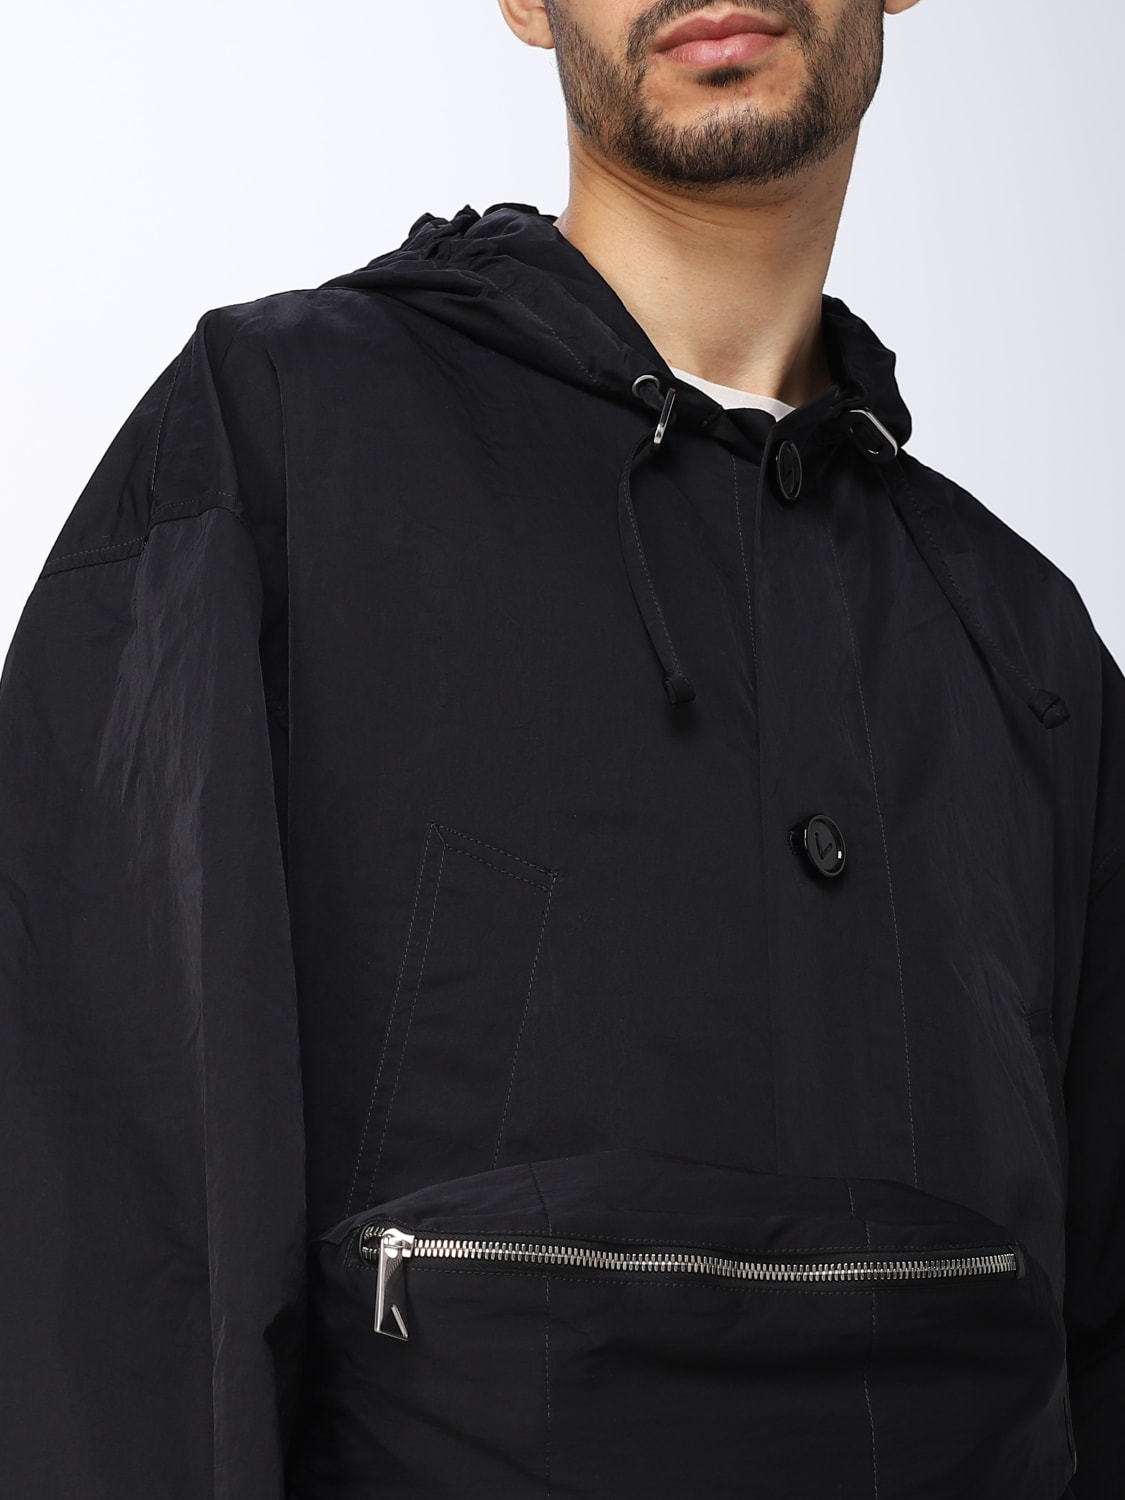 BOTTEGA VENETA: jacket for man - Black | Bottega Veneta jacket ...